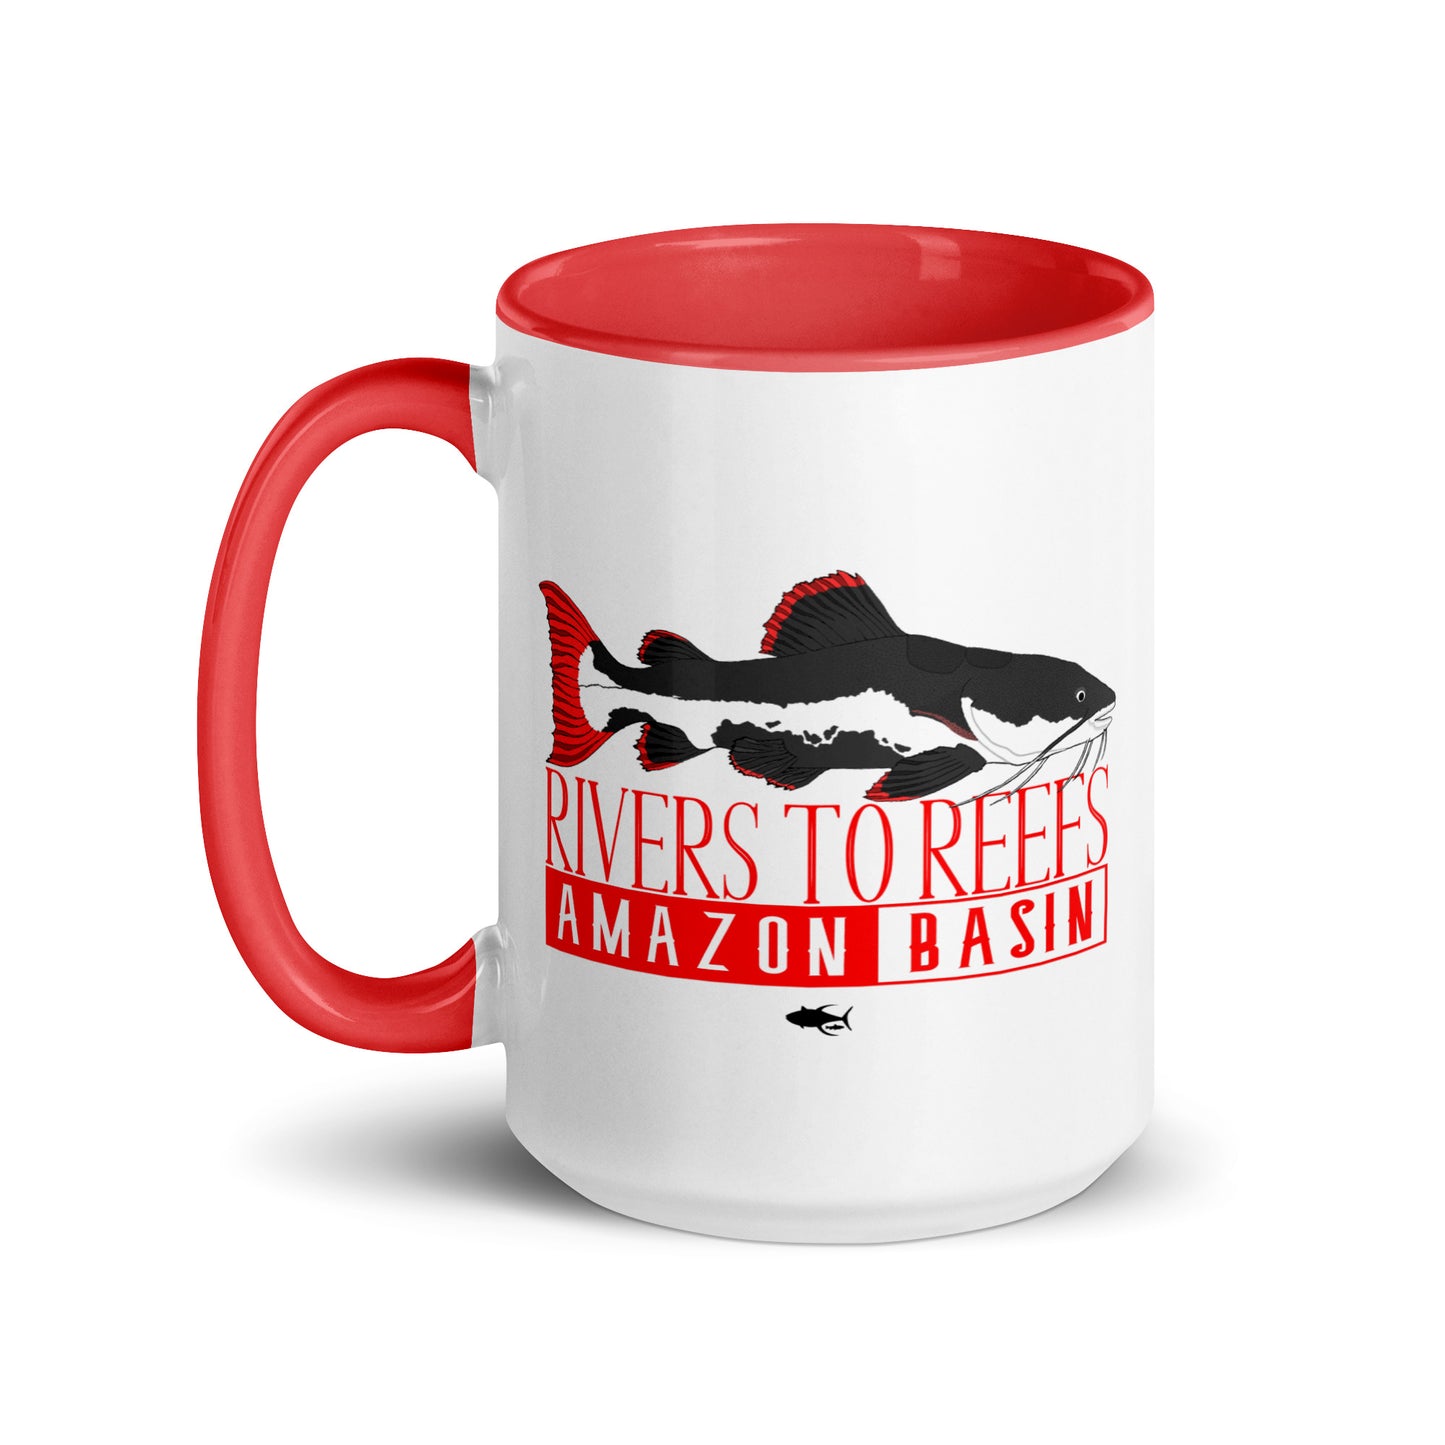 Amazon Basin Mug